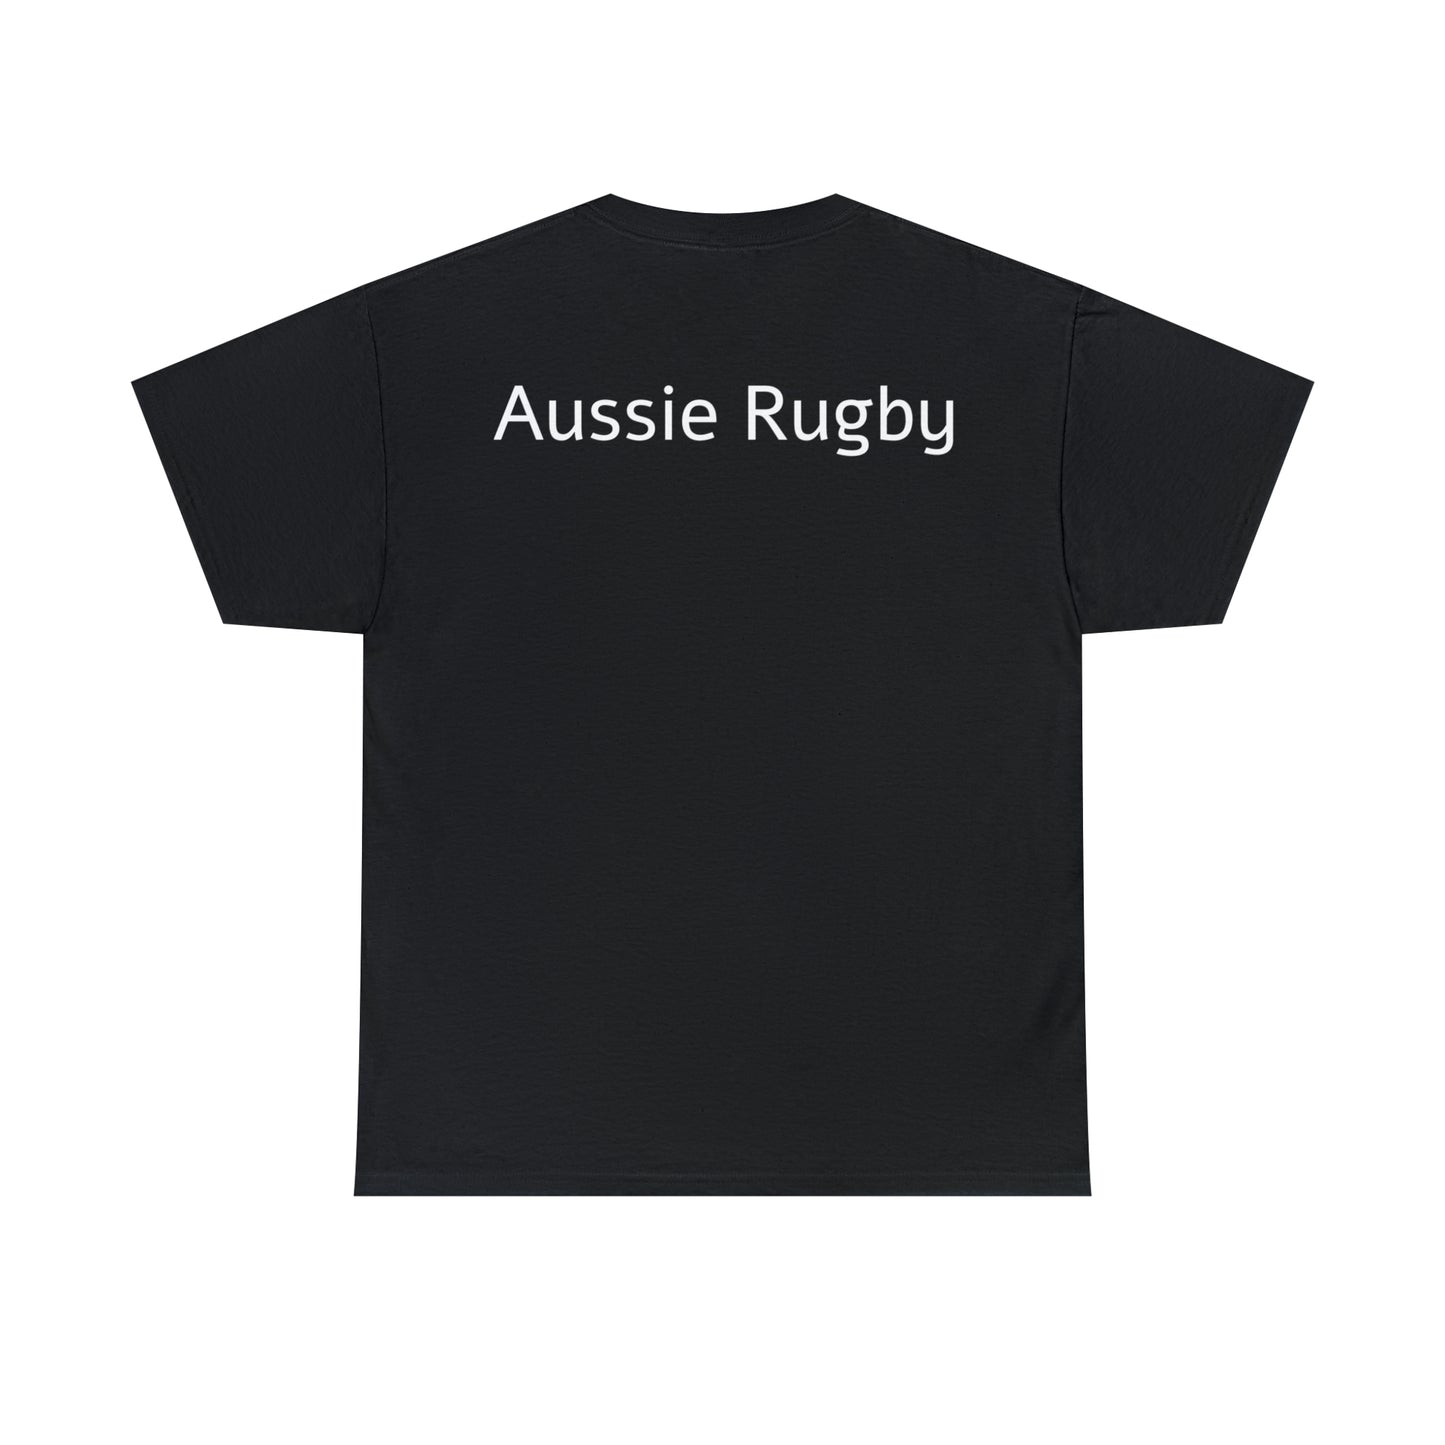 Ready Aussies - black shirts